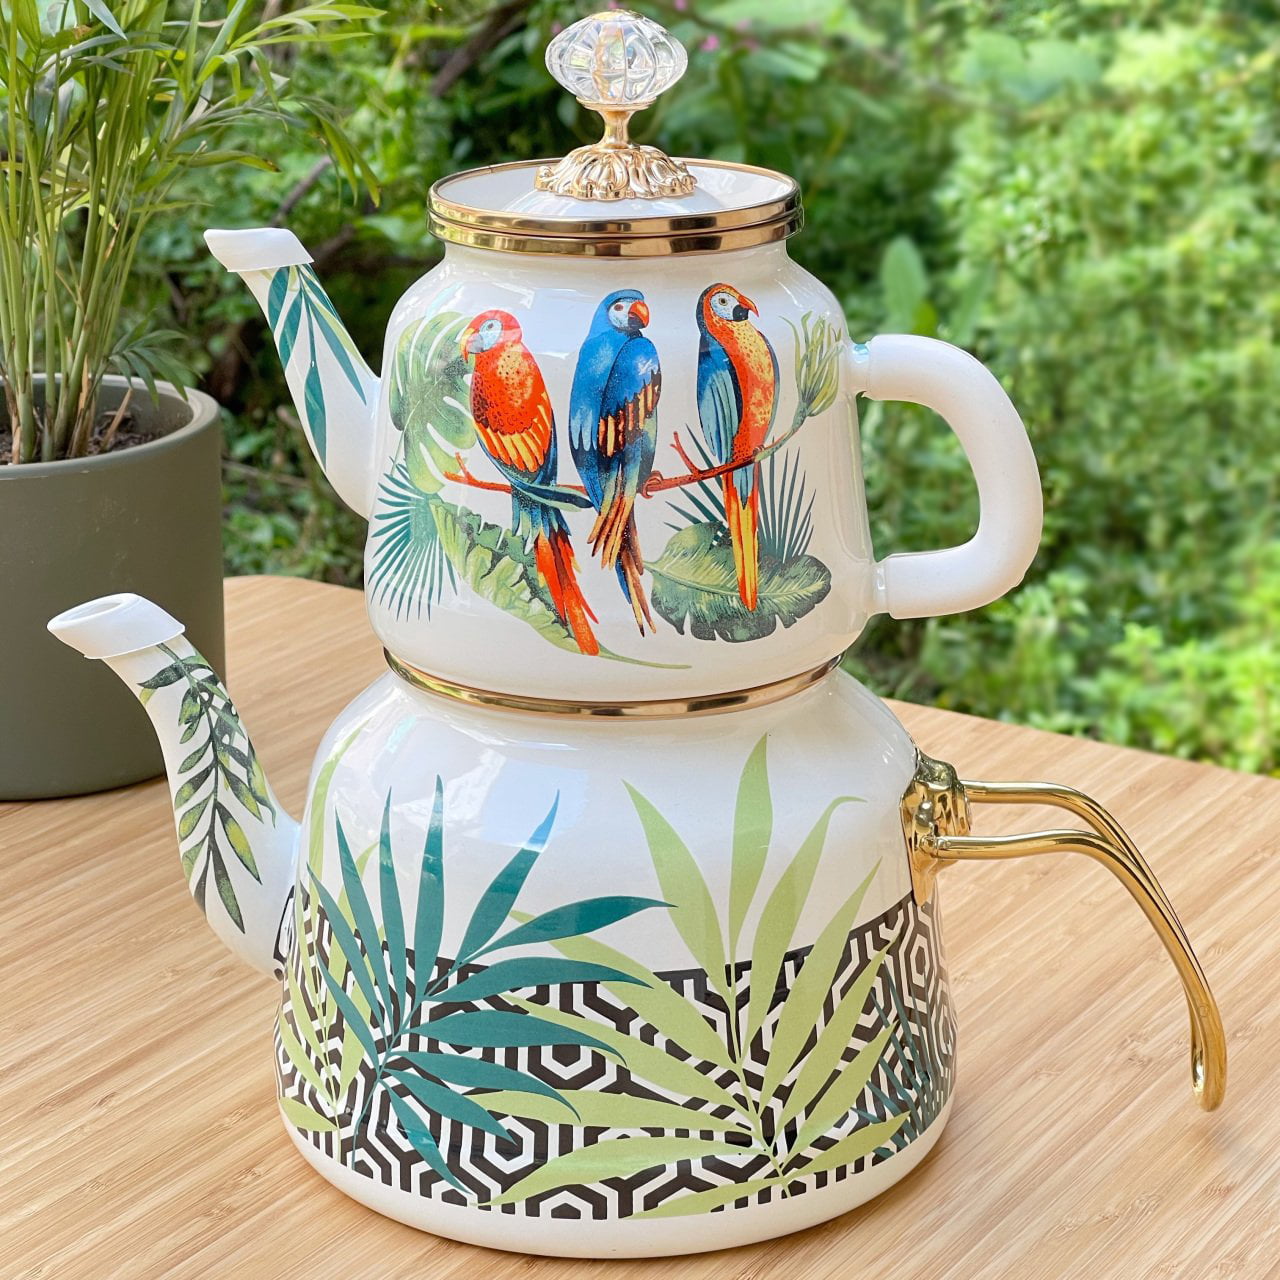 https://traditionalturk.com/wp-content/uploads/2021/08/vintage-parrot-pattern-enamel-turkish-tea-pot-kettle-6.jpg